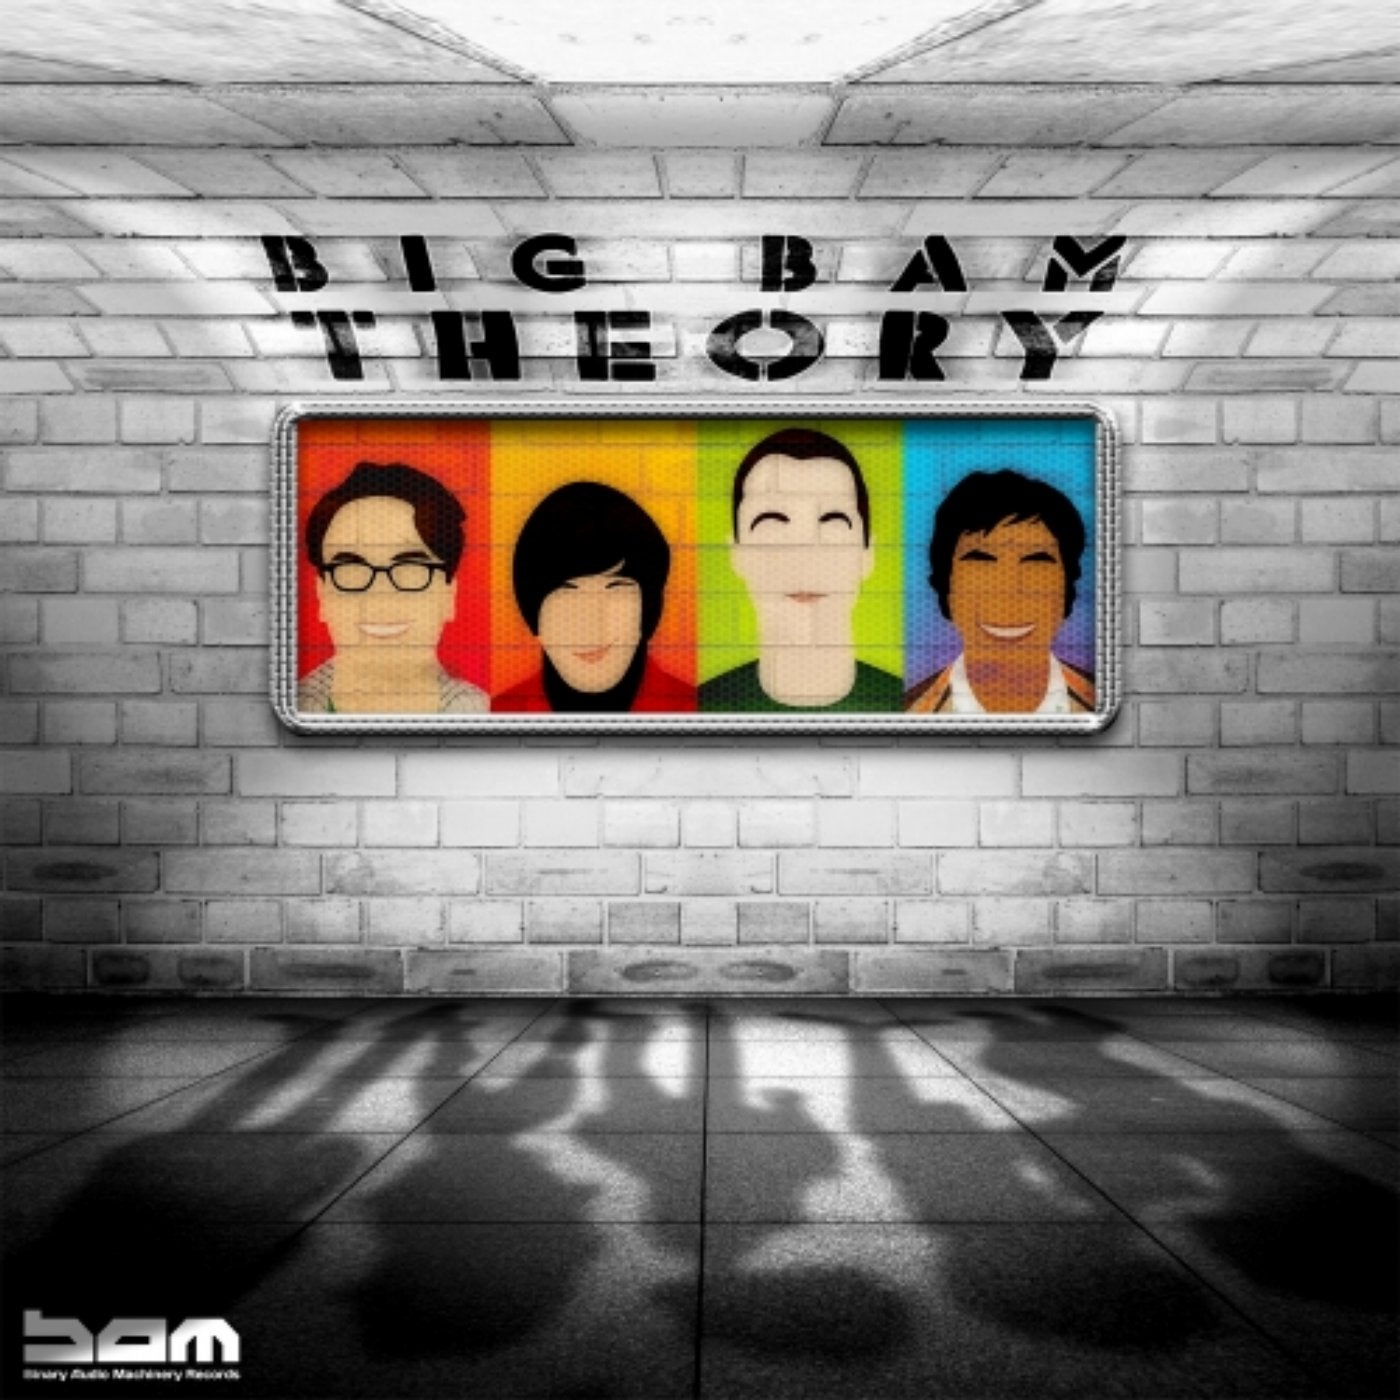 THE BIG BAM THEORY BY DJ SEEMAN